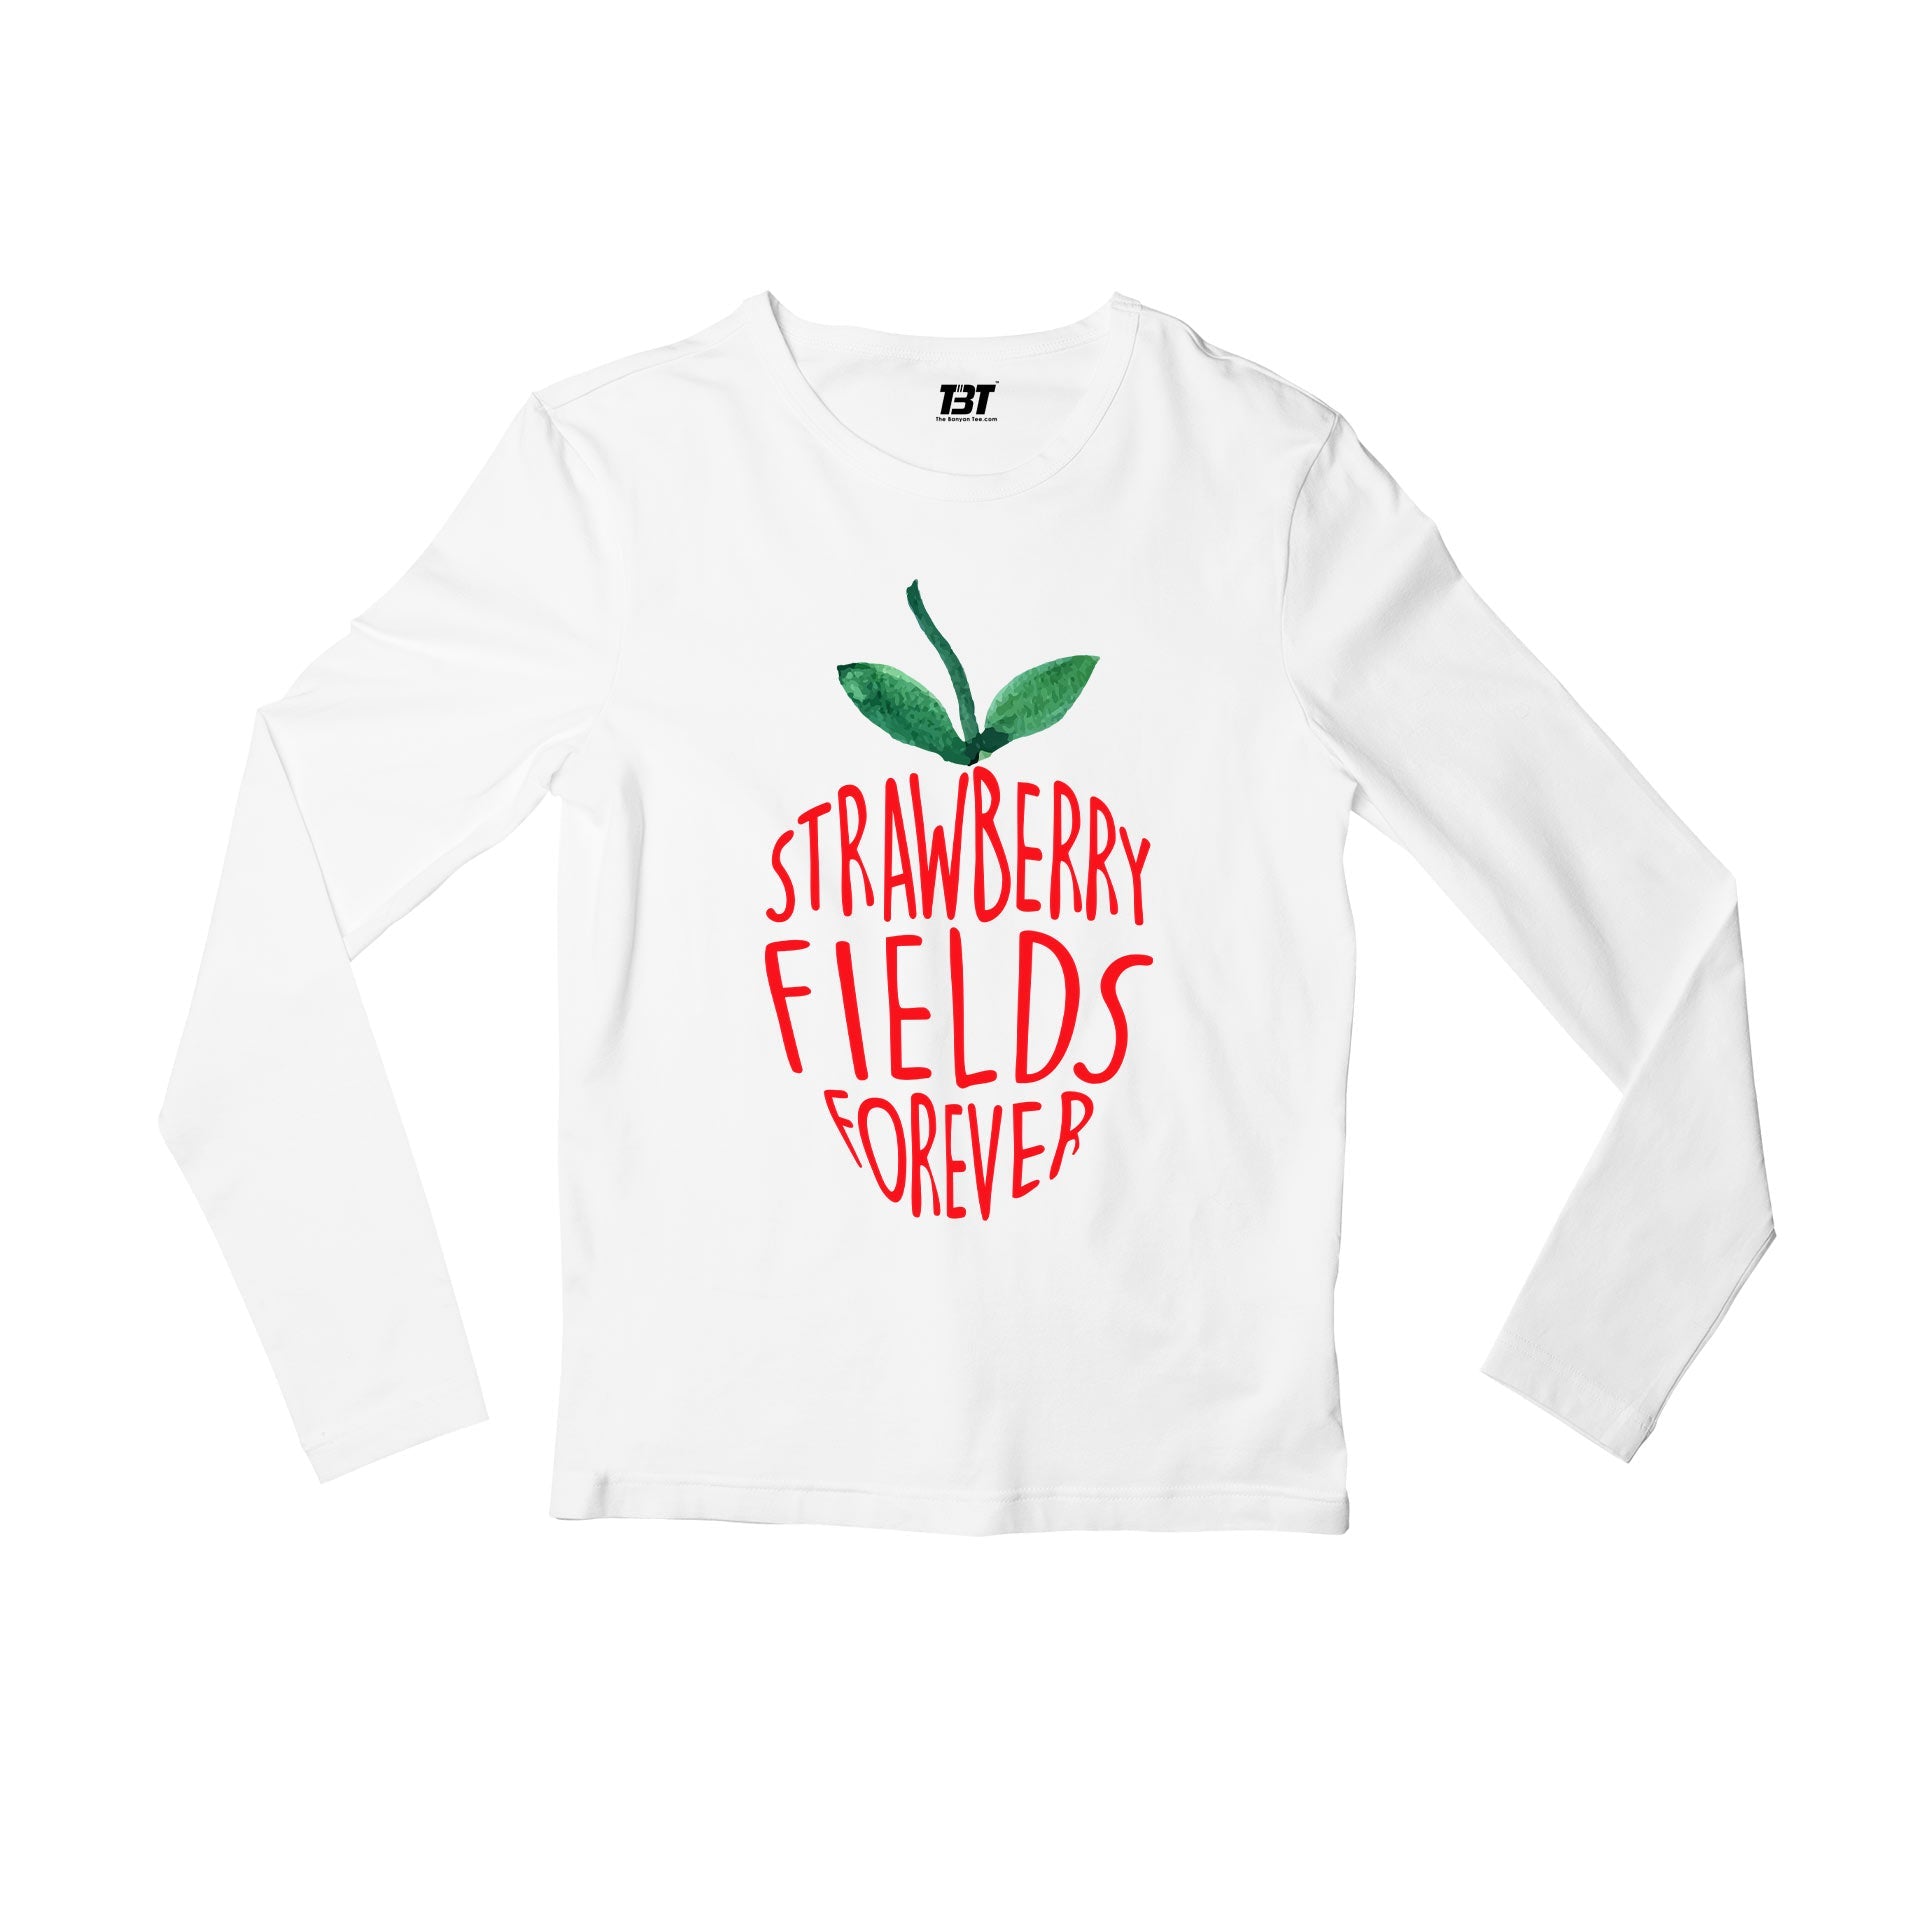 The Beatles Full Sleeves T-shirt Long Sleeves - Strawberry Fields Forever Full Sleeves T-shirt Long Sleeves The Banyan Tee TBT